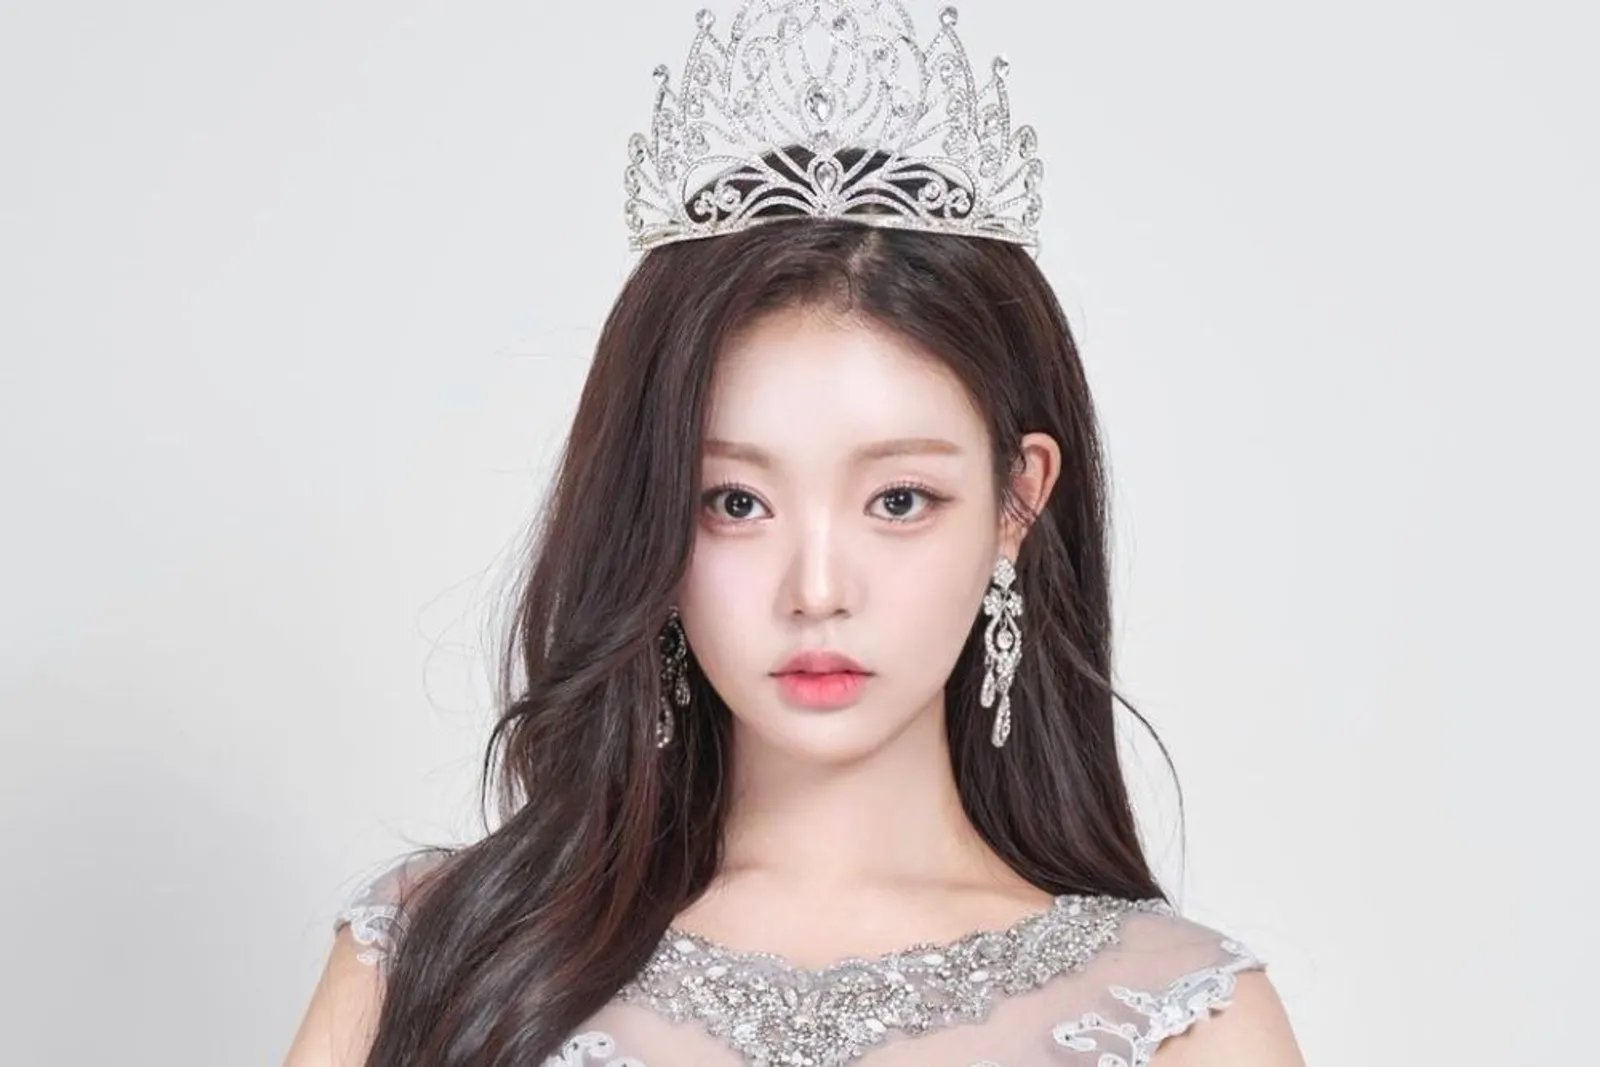 Pesona Yoo Si Eun, Finalis Miss Korea & Peserta 'Single's Inferno 3'